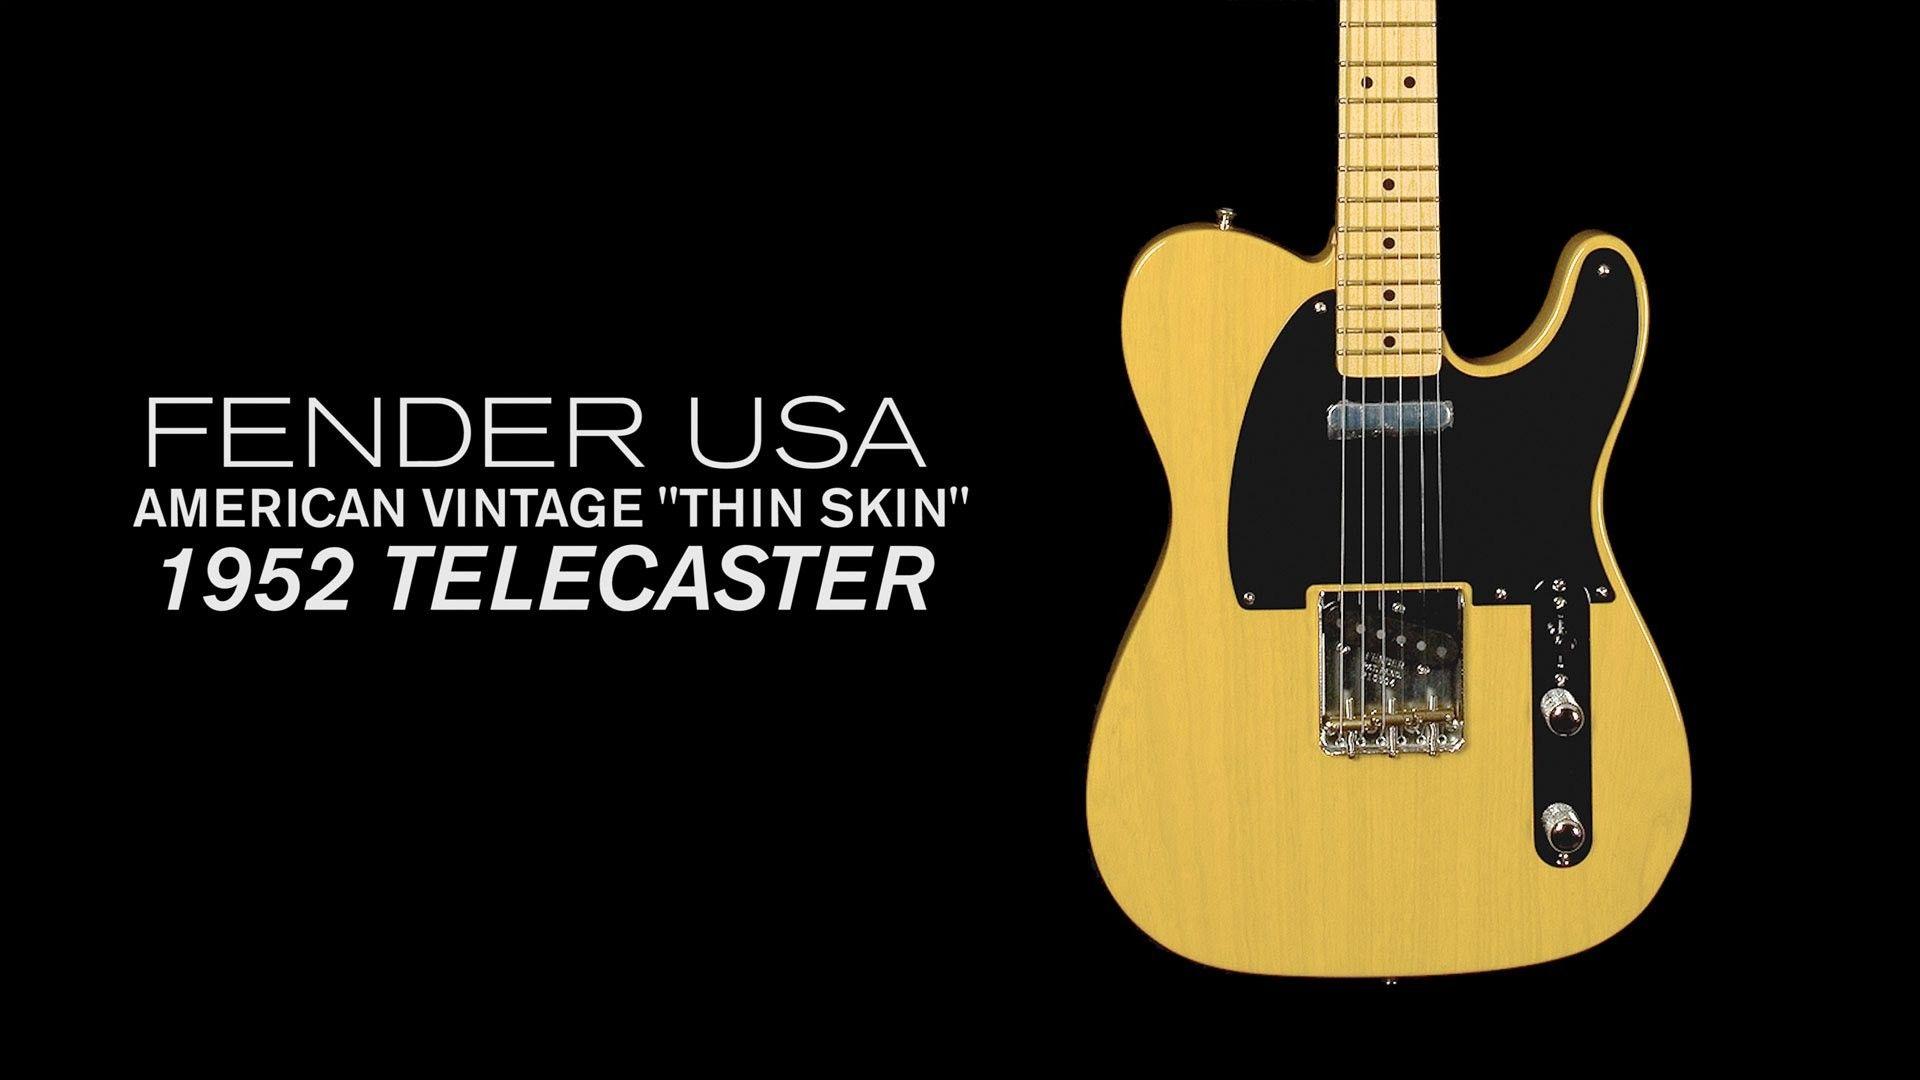 Fender Telecaster Wallpaper (the best image in 2018)